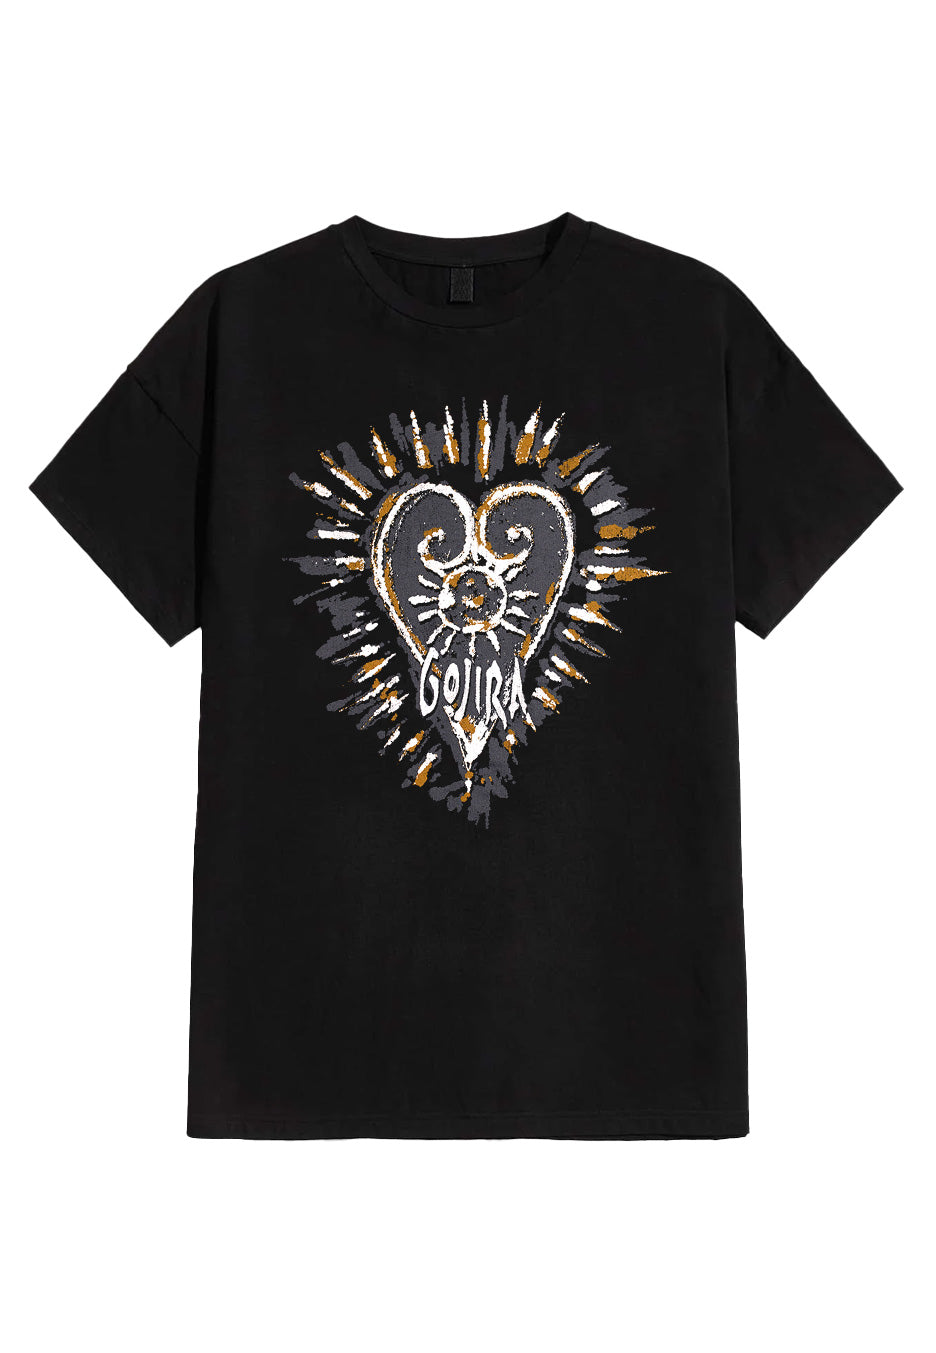 Gojira - Fortitude Heart - T-Shirt